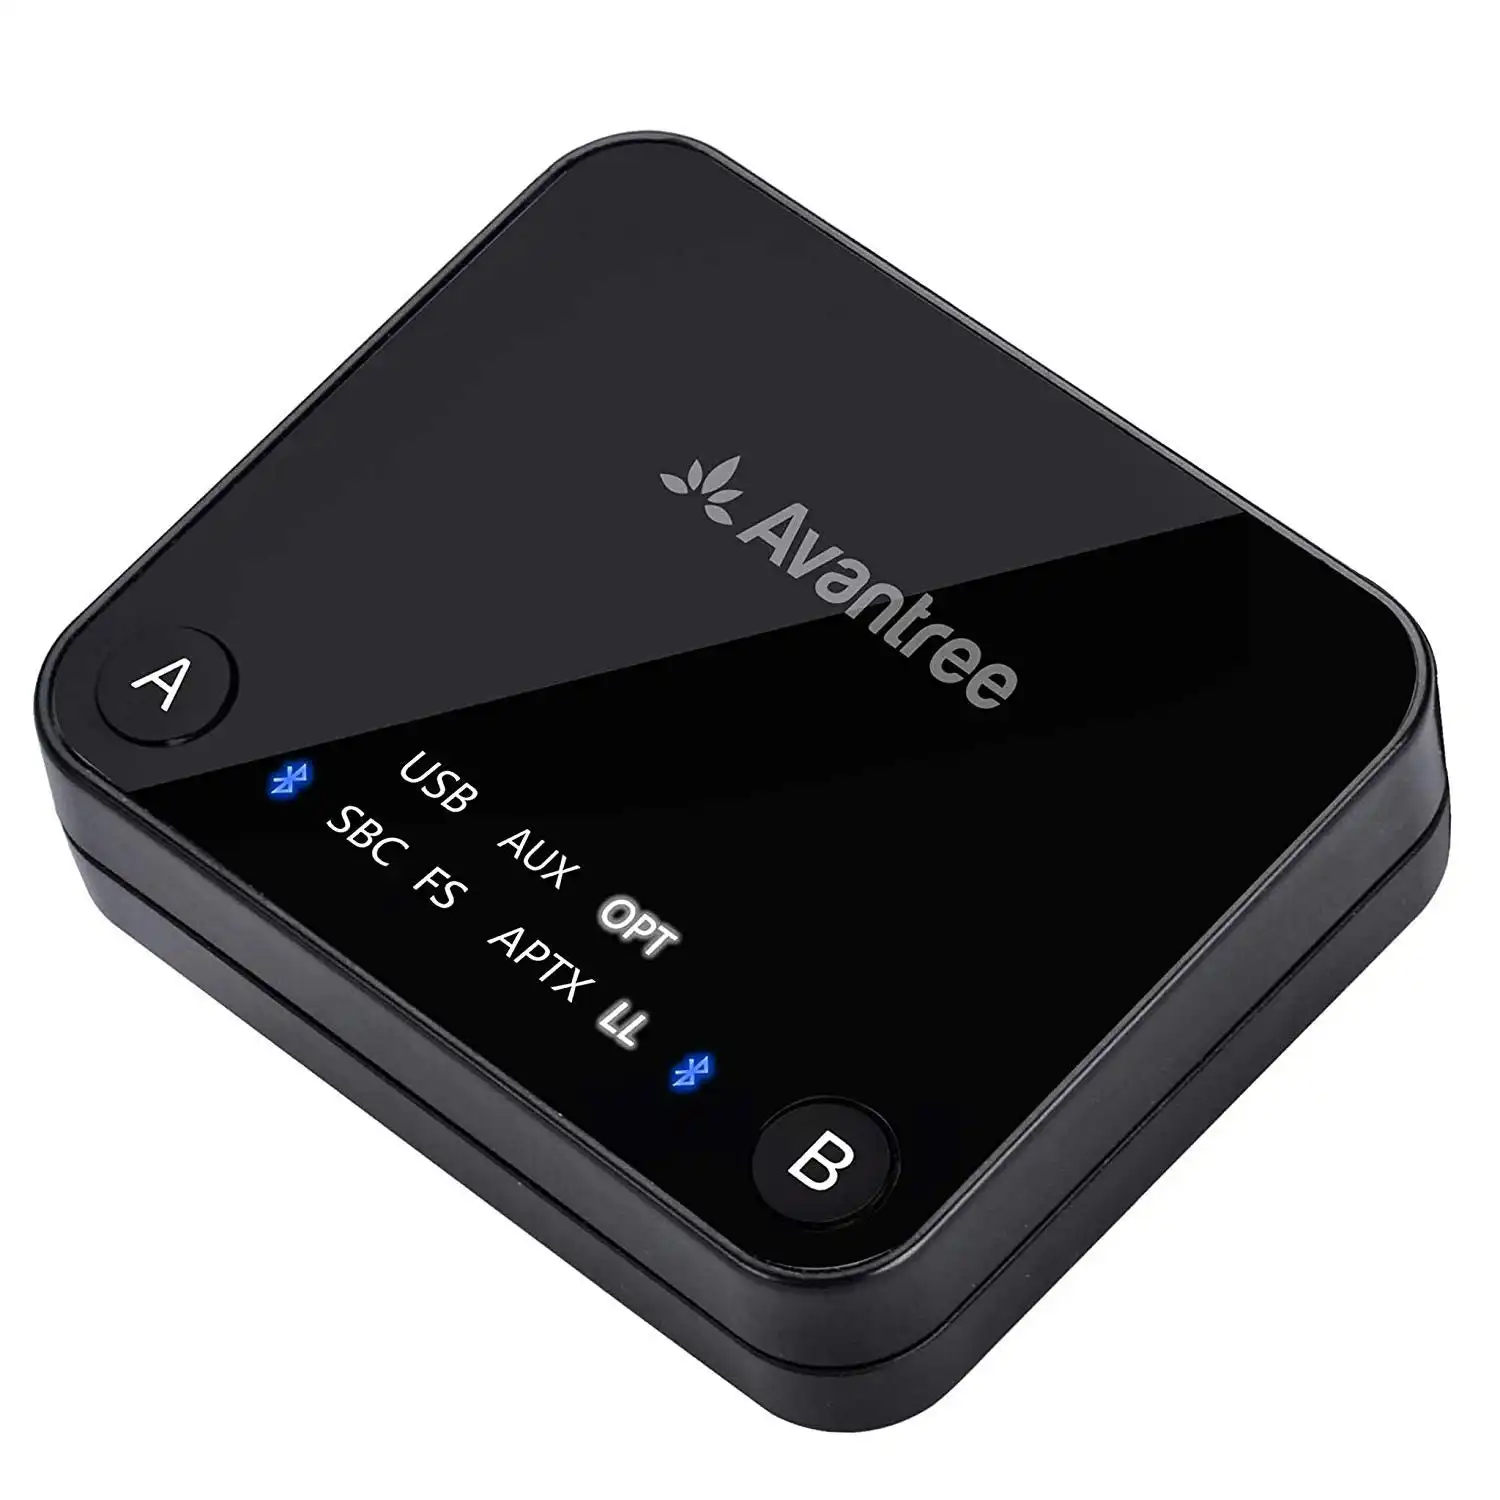 Avantree Audikast aptX Low Latency Bluetooth Audio Transmitter for TV PC (Optical Digital Toslink, 3.5mm AUX, RCA, PC USB) 100ft Long Range